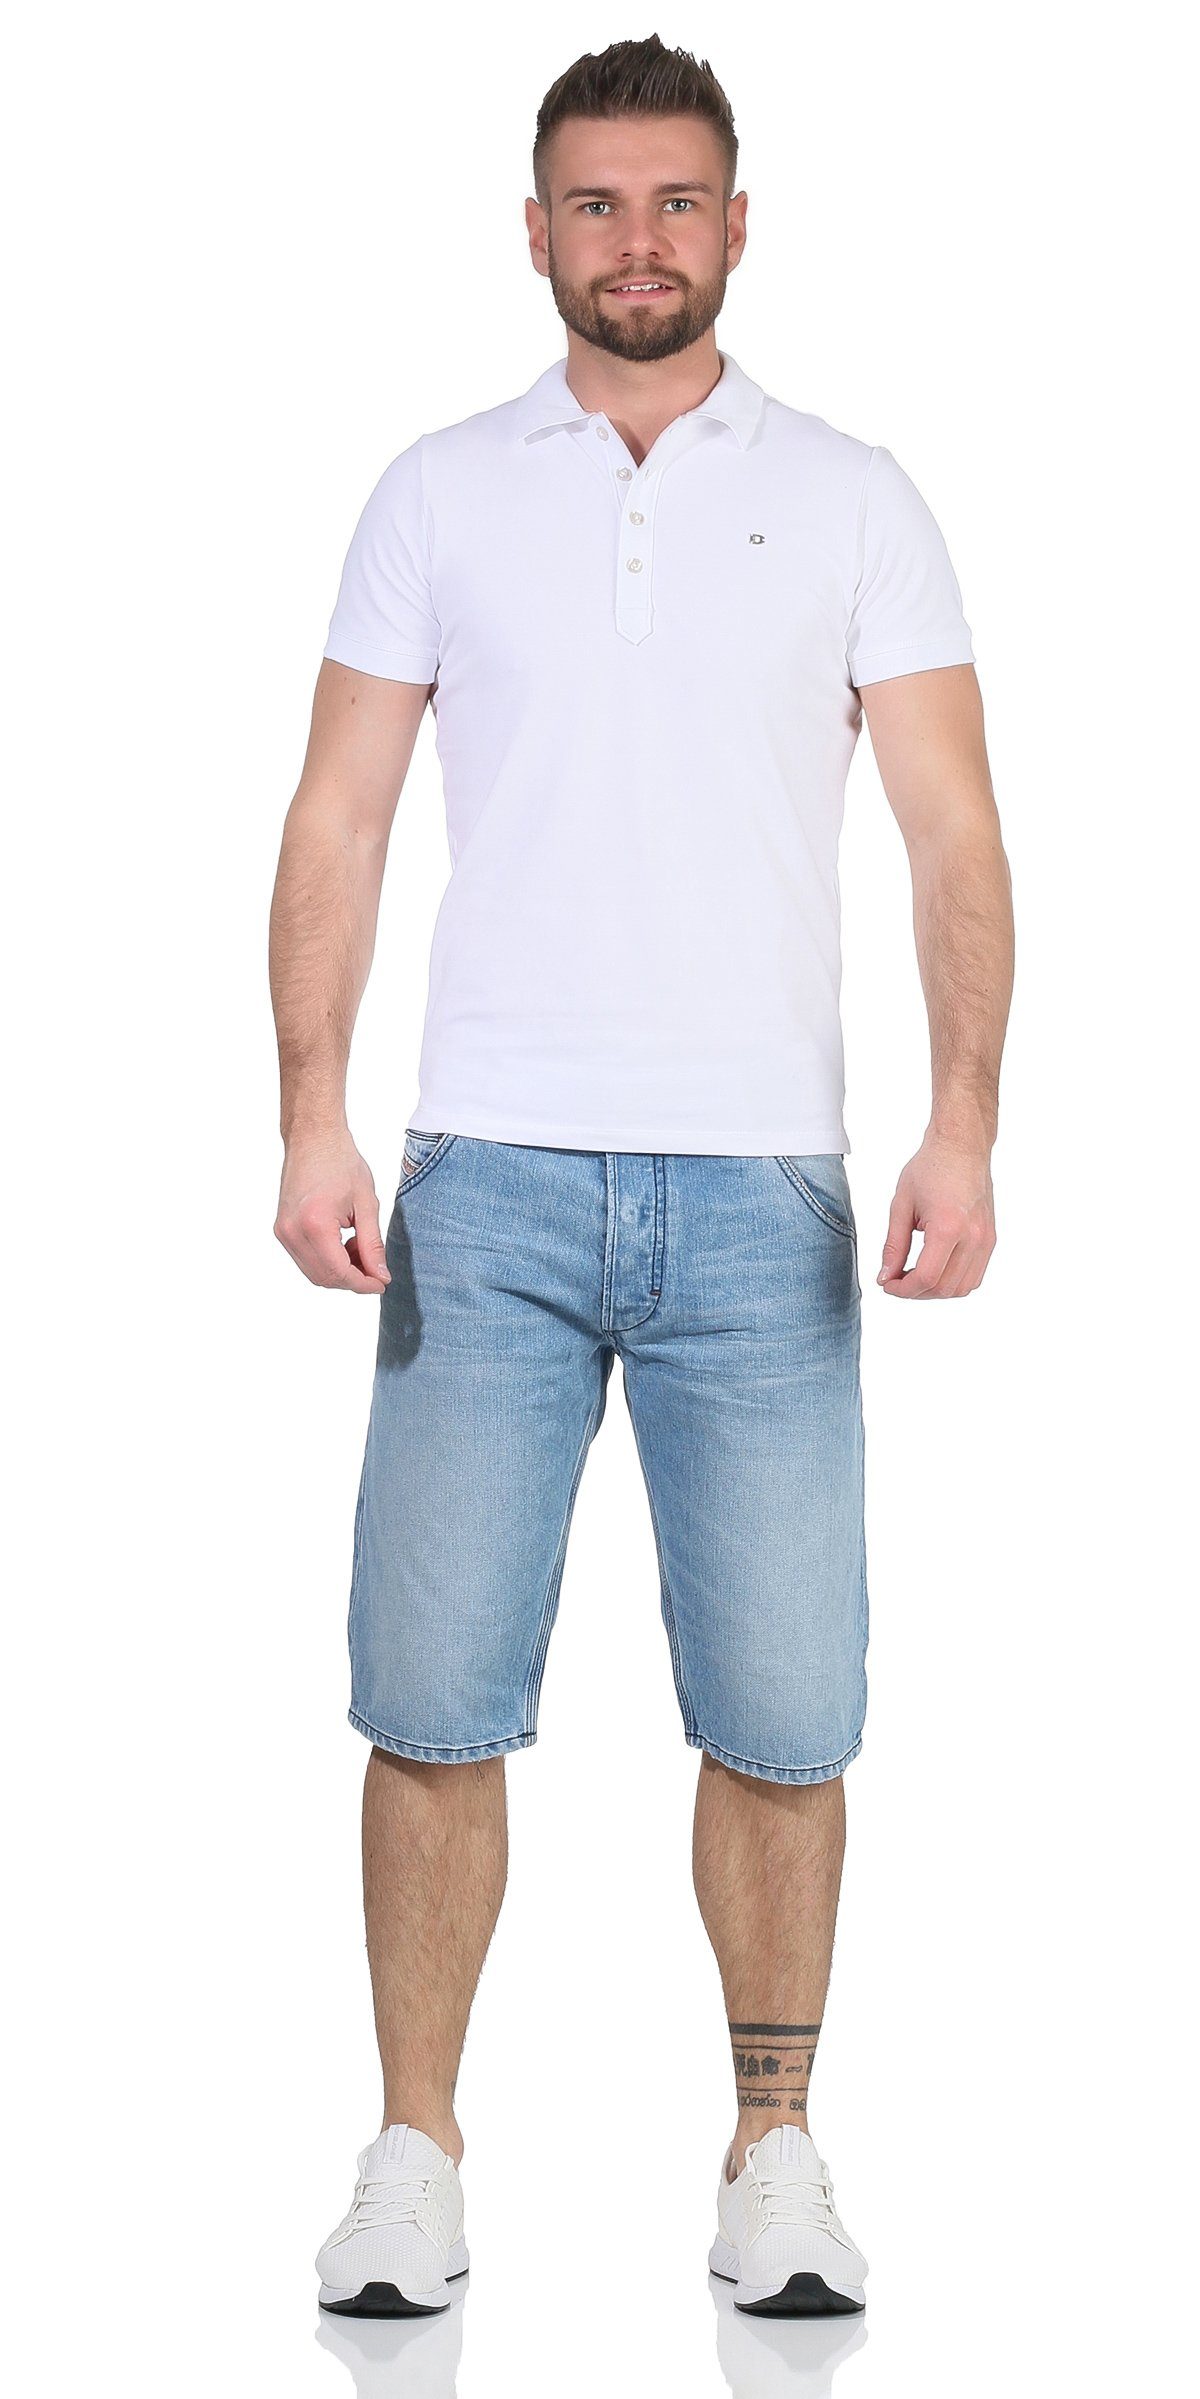 R18K5 Shorts, kurze Jeansshorts Herren Shorts Diesel Kroshort Used-Look RG48R Hose Jeans Hellblau dezenter